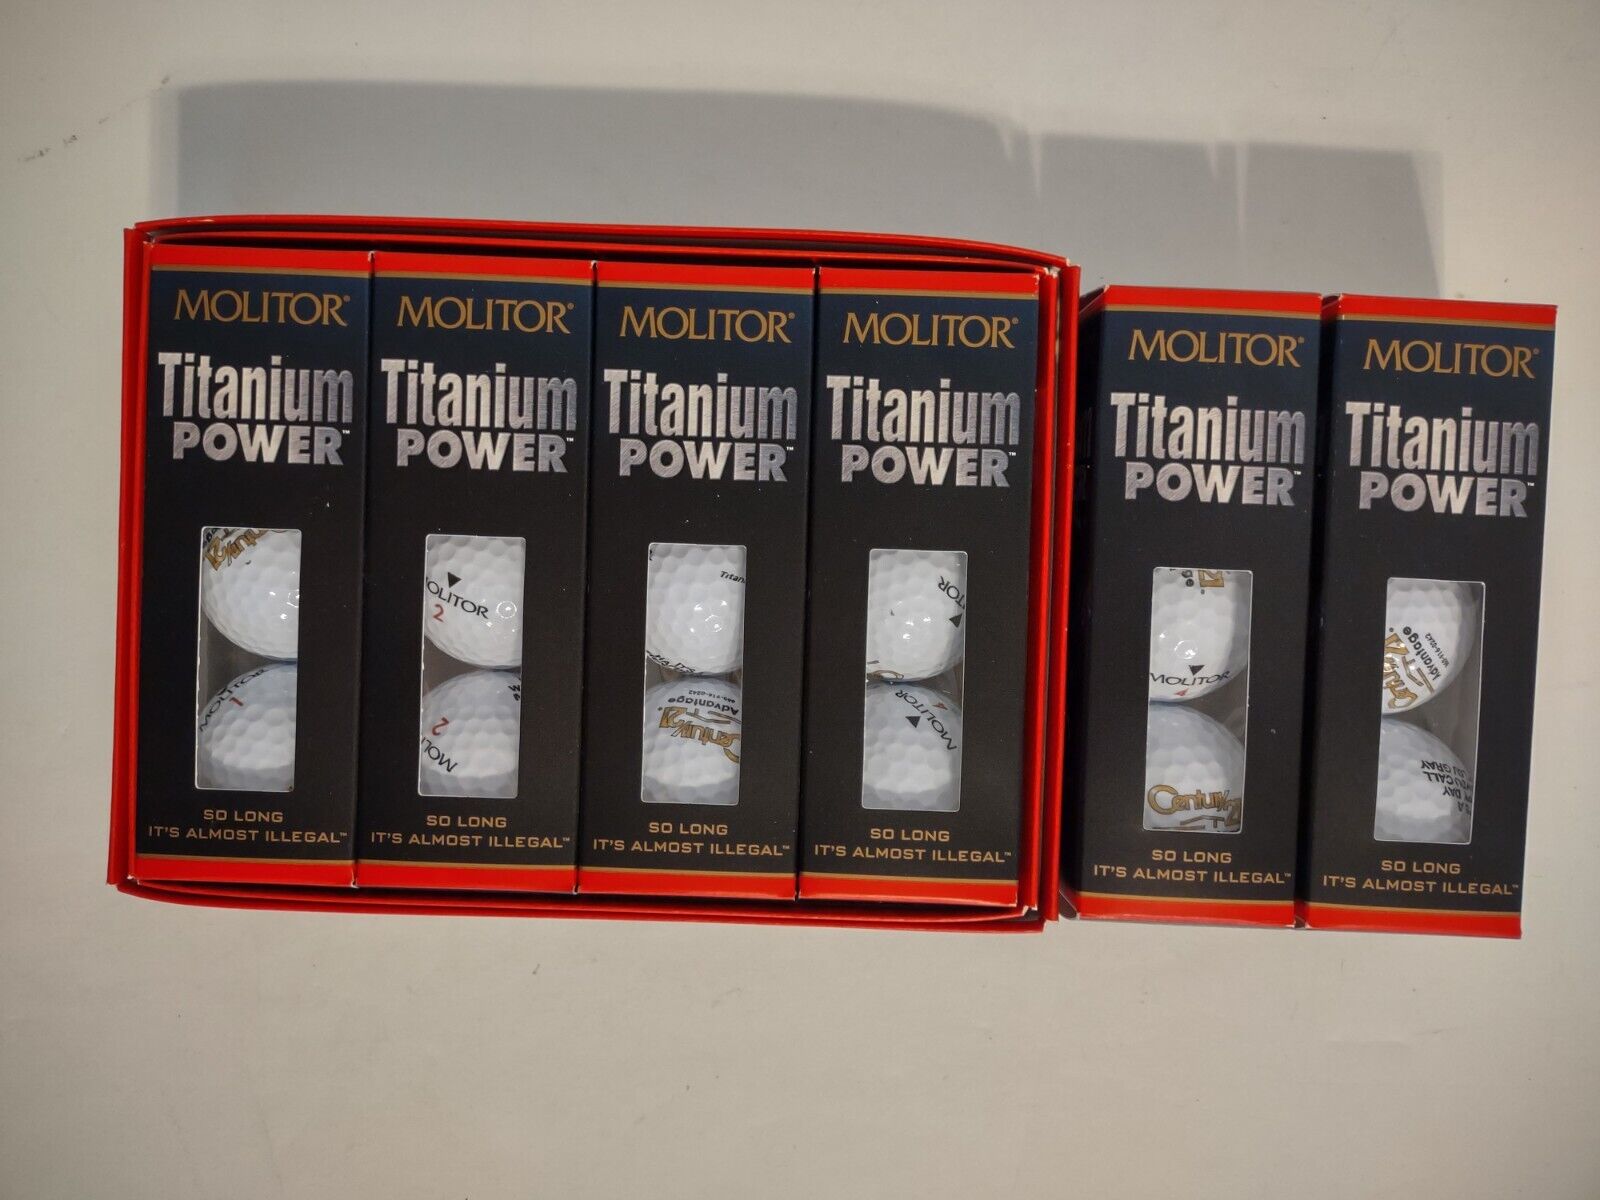 Lot of 18 Spalding Molitor Titanium Power Golf Balls - Brand New